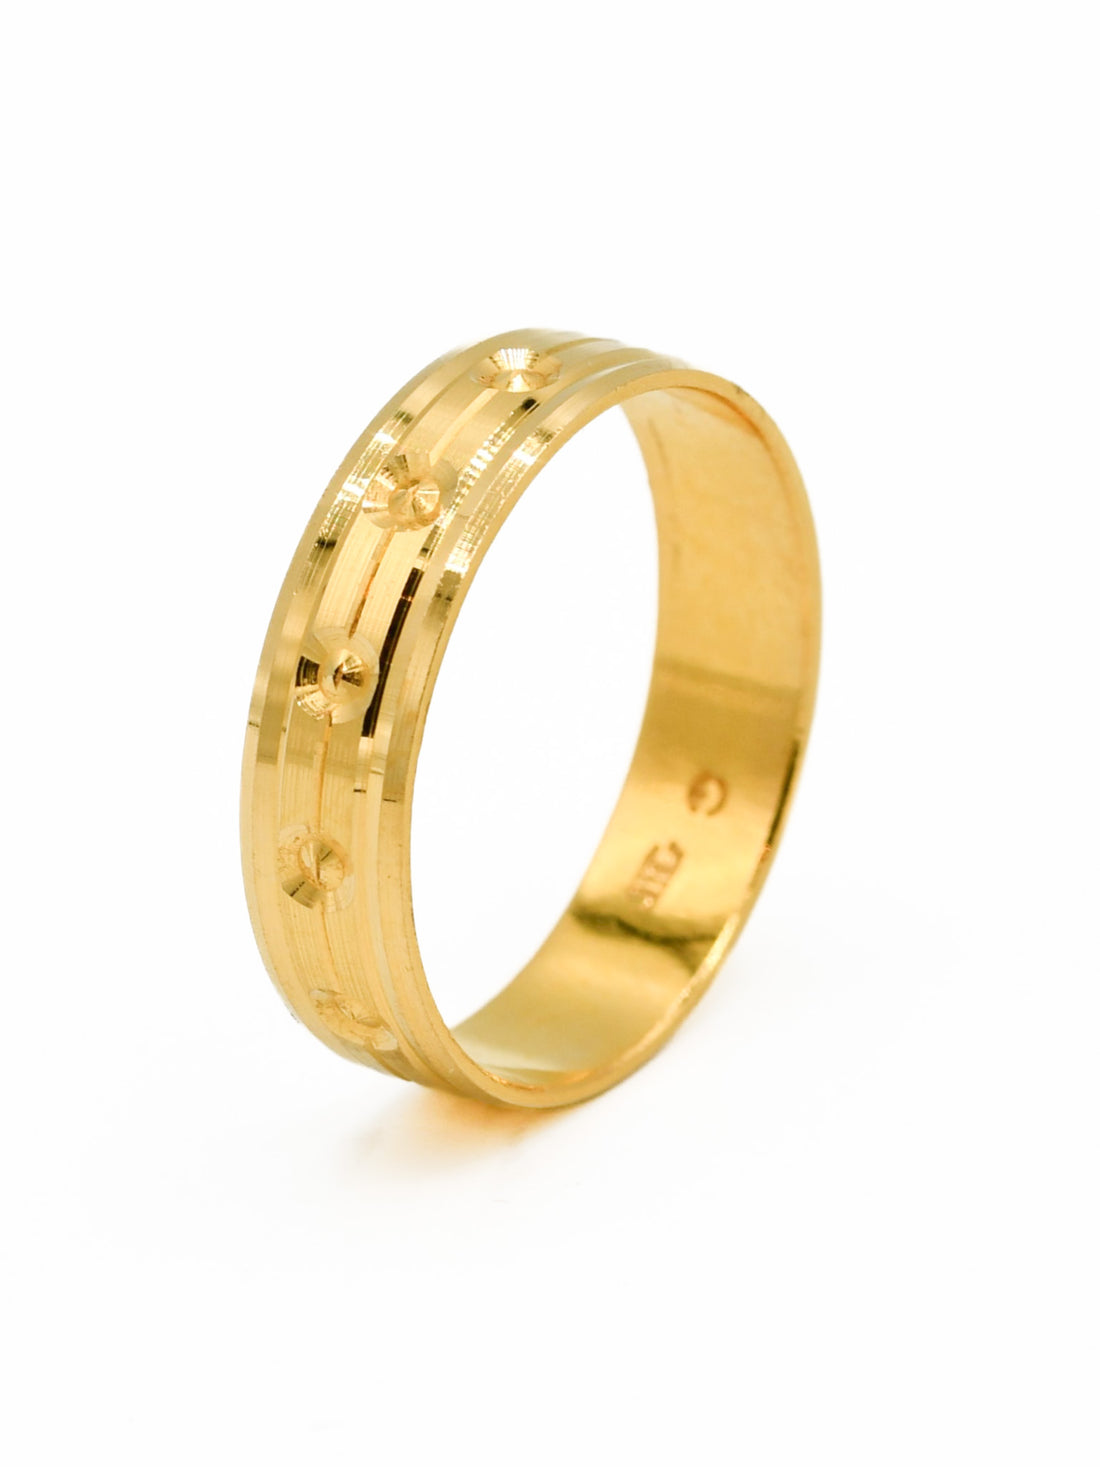 22ct Gold Band Ring - Roop Darshan